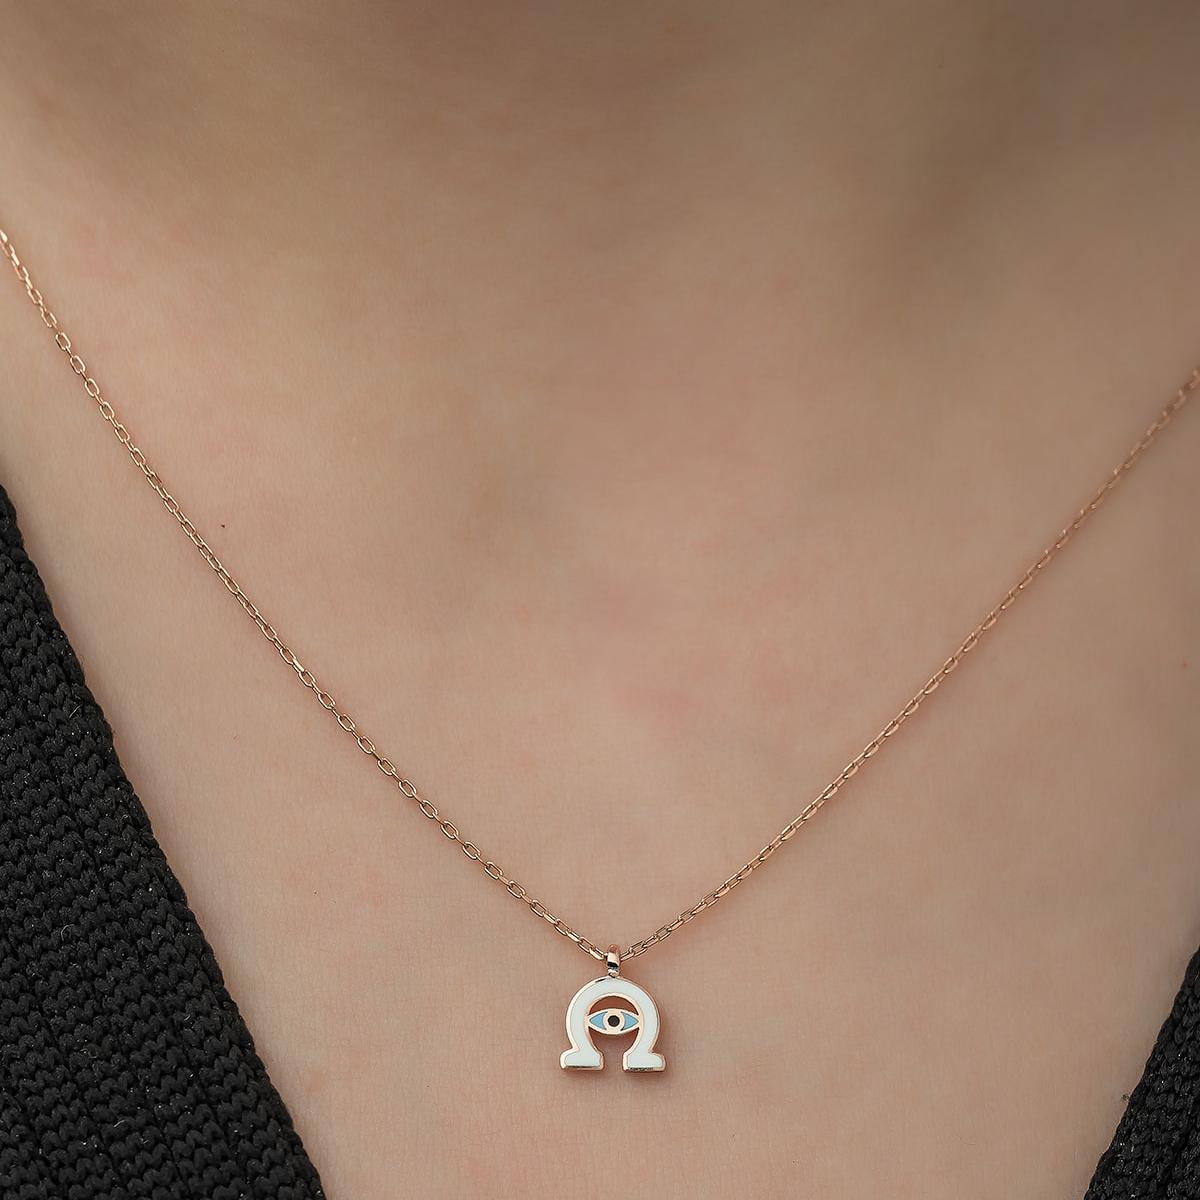 Horseshoe Diamond Necklace • Evil Eye Necklace • Eye Of Horus Necklace - Trending Silver Gifts